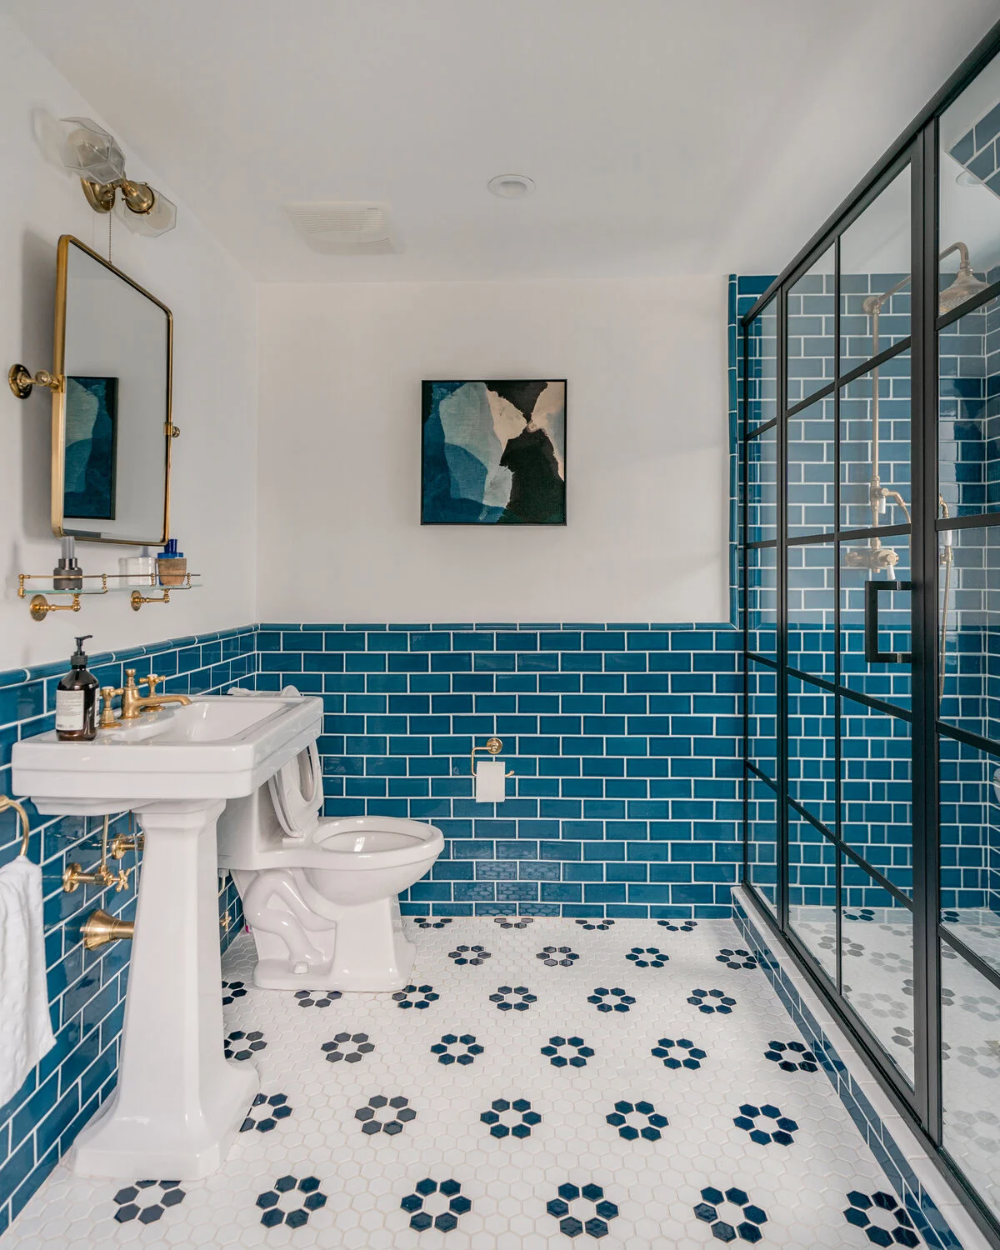 Mosaic Bathroom Tiles Design Ideas